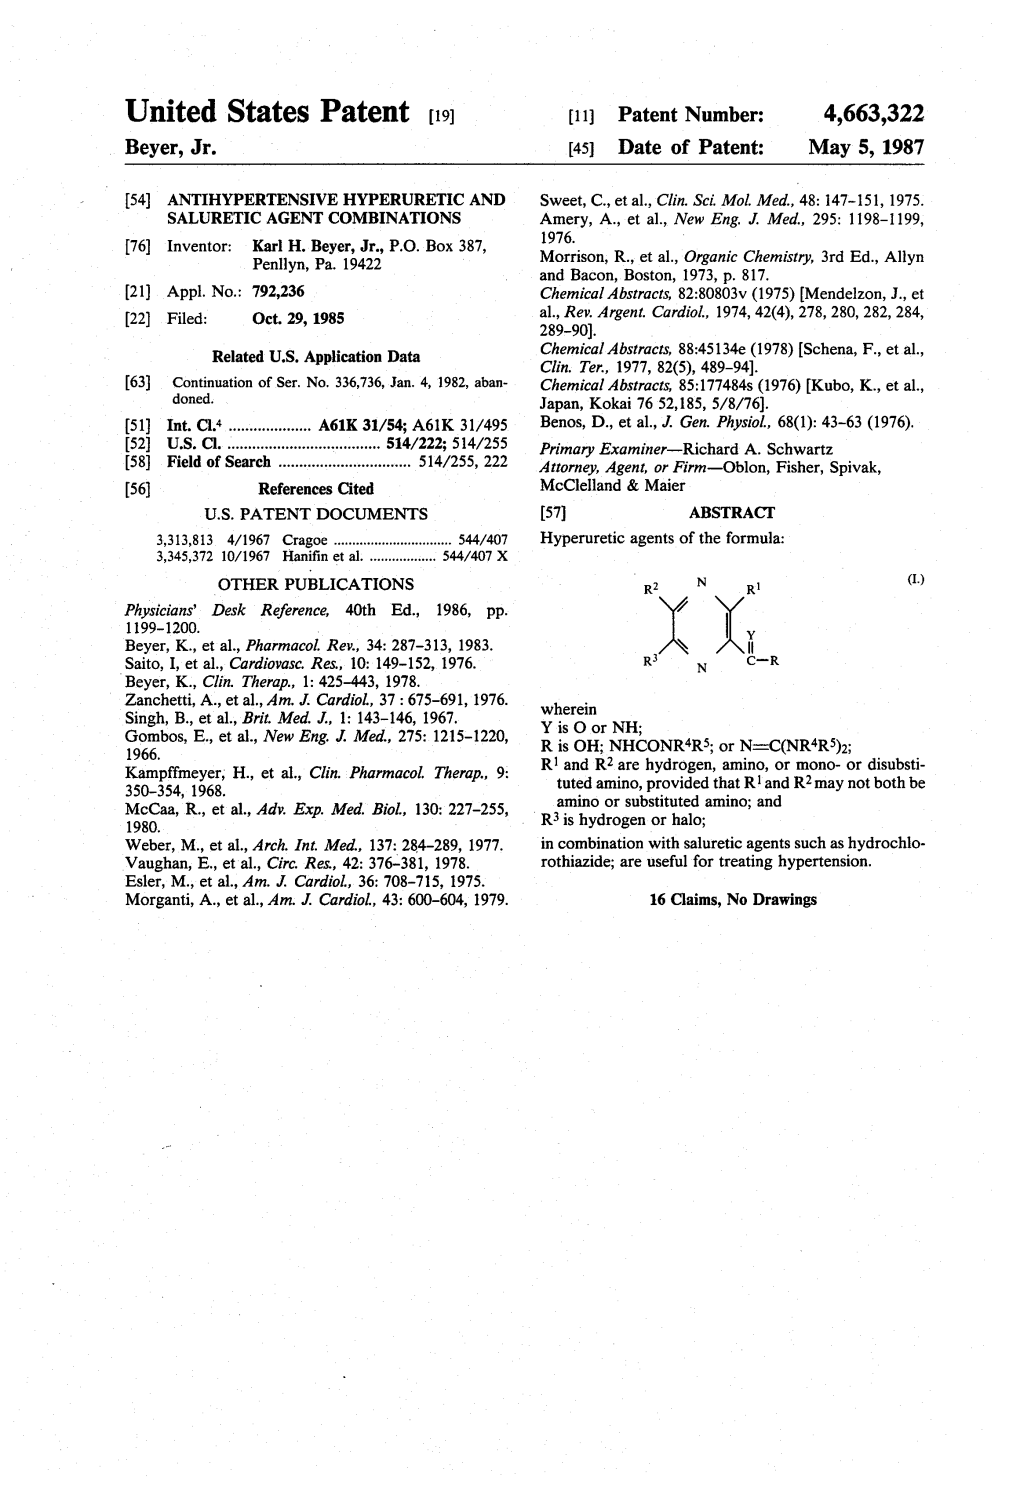 United States Patent (19) 11 Patent Number: 4,663,322 Beyer, Jr